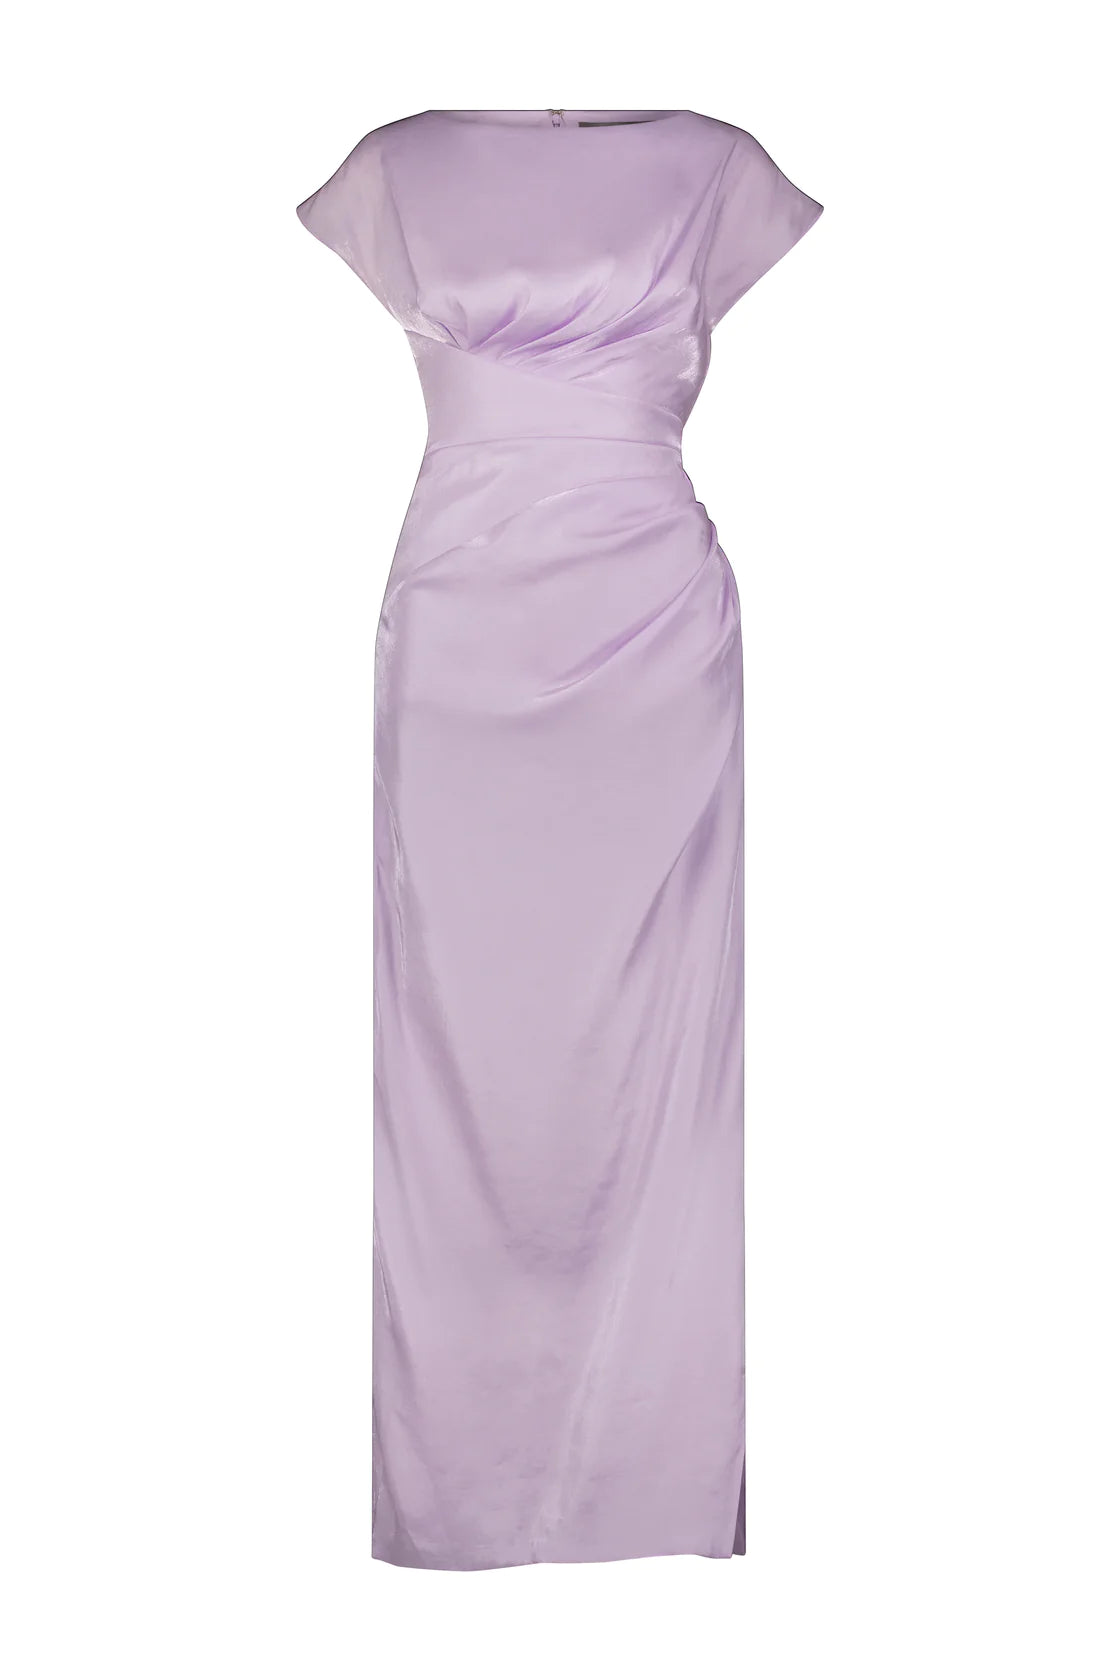 SATIN CREPE FLORENCE DRESS - Lilac